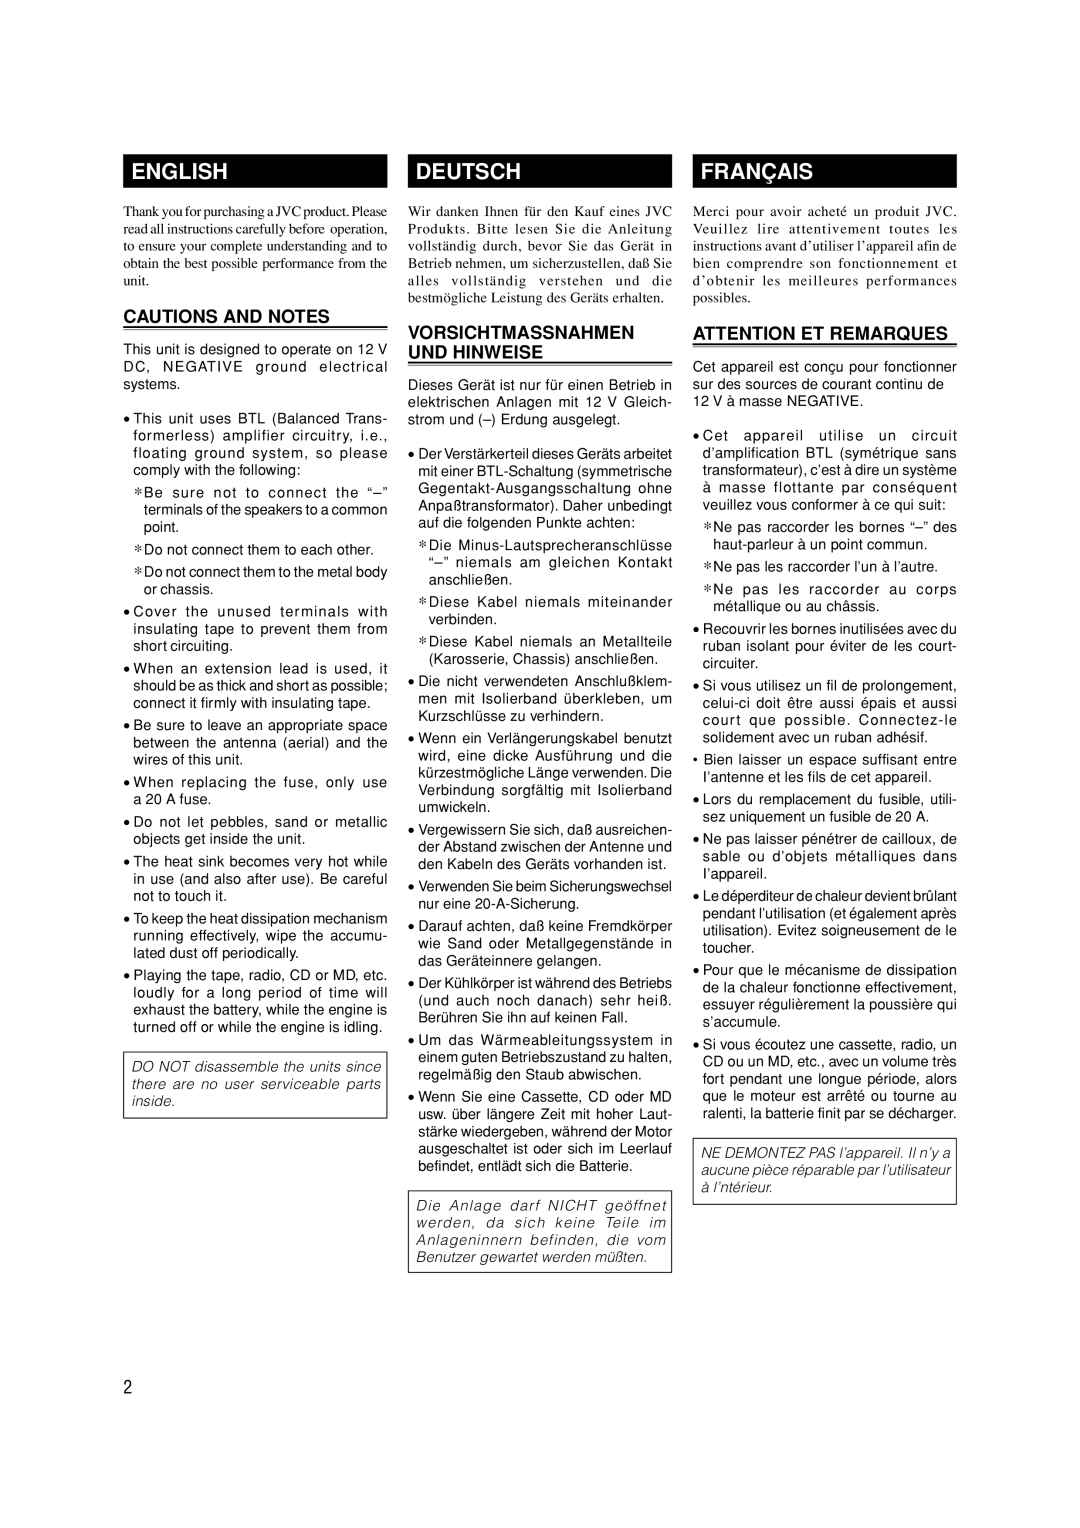 JVC KS-AX4550 English, Deutsch, Français, Cautions And Notes, Vorsichtmassnahmen Und Hinweise, Attention Et Remarques 